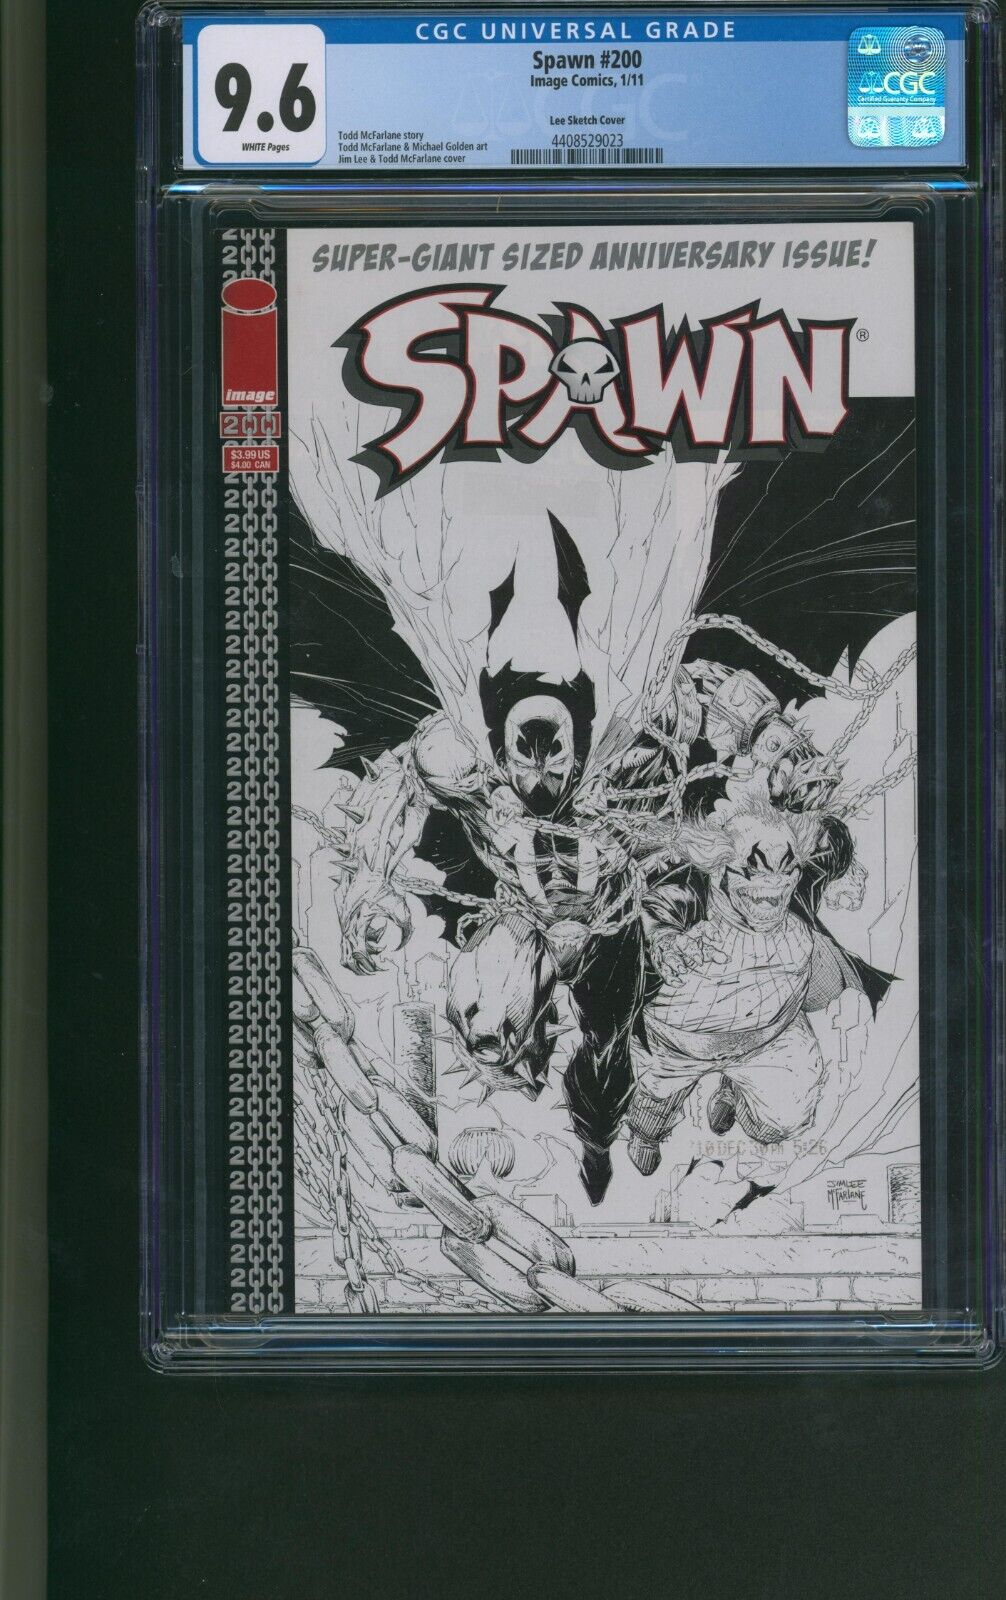 Spawn #200 CGC 9.6 Todd McFarlane / Jim Lee B&W Sketch Cover Variant